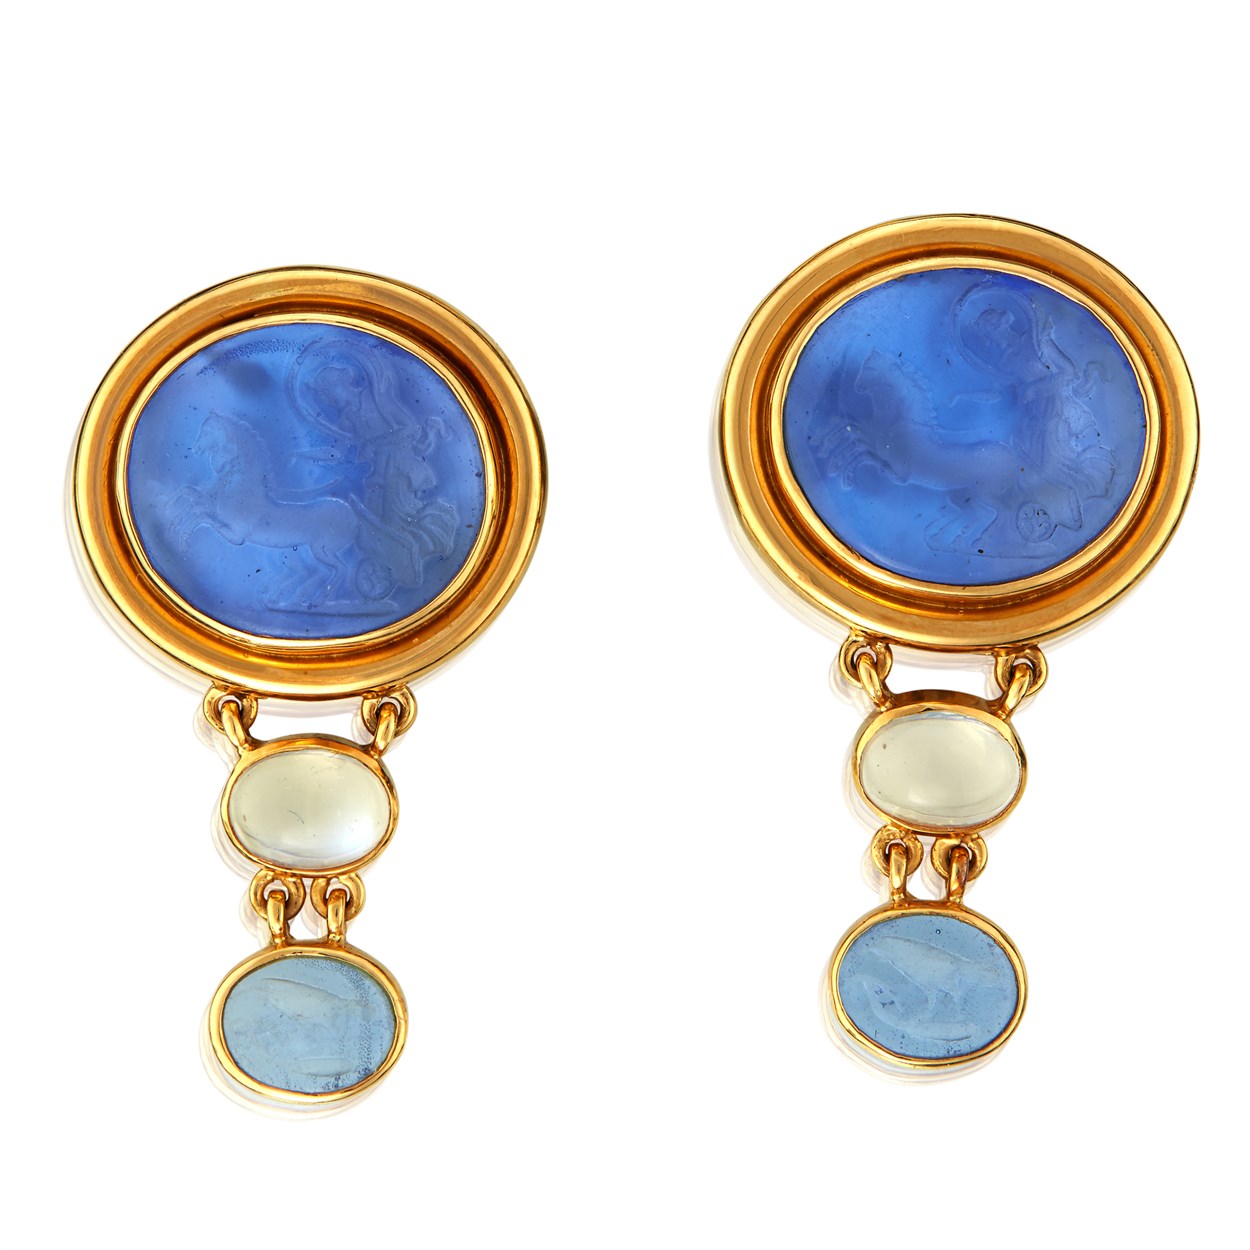 Lot 48 - A pair of eighteen karat gold and carved glass earrings, Elizabeth Locke